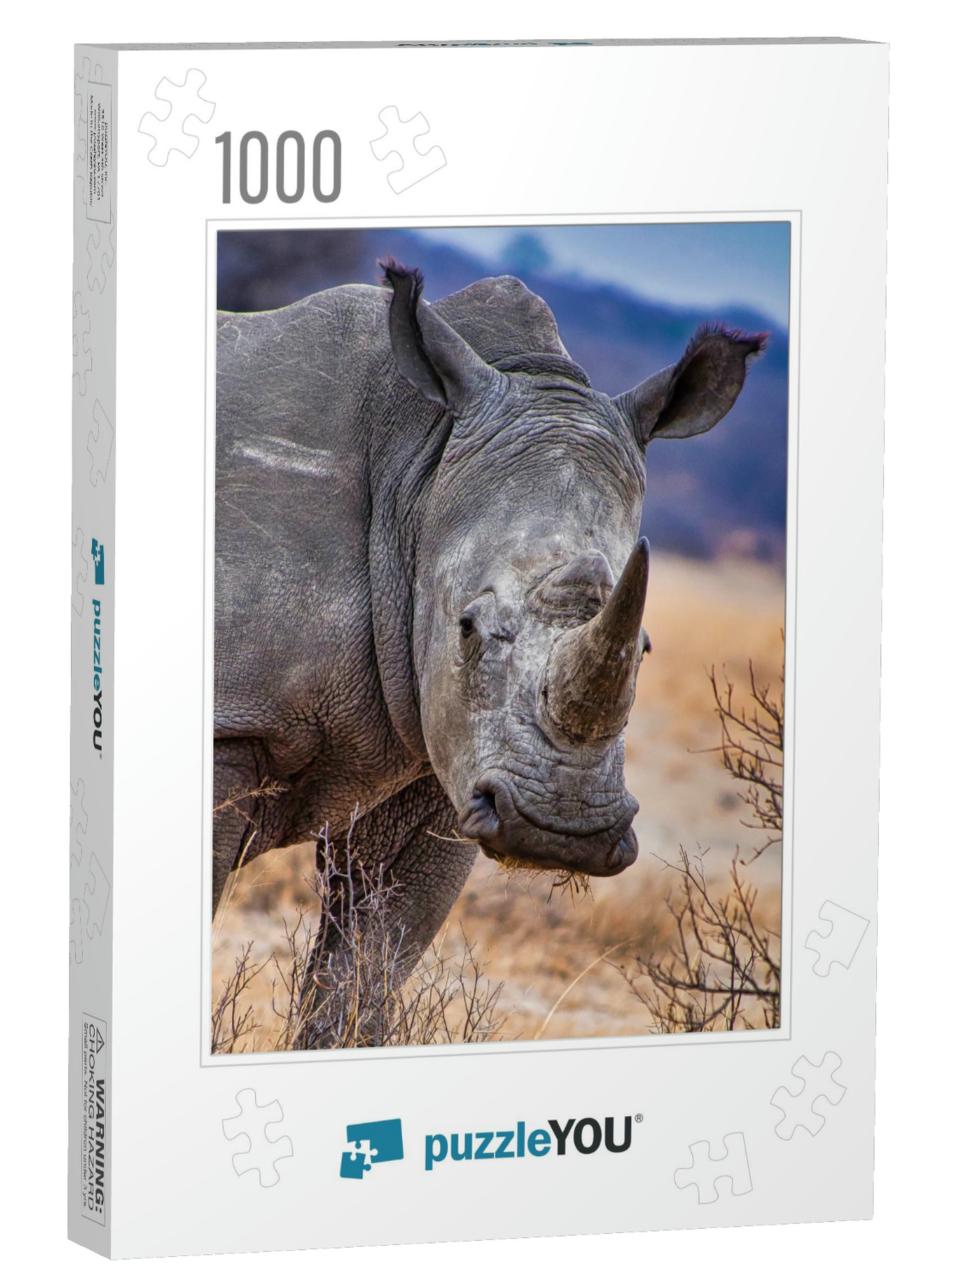 White Rhinoceros, Khama Rhino Sanctuary, Botswana... Jigsaw Puzzle with 1000 pieces